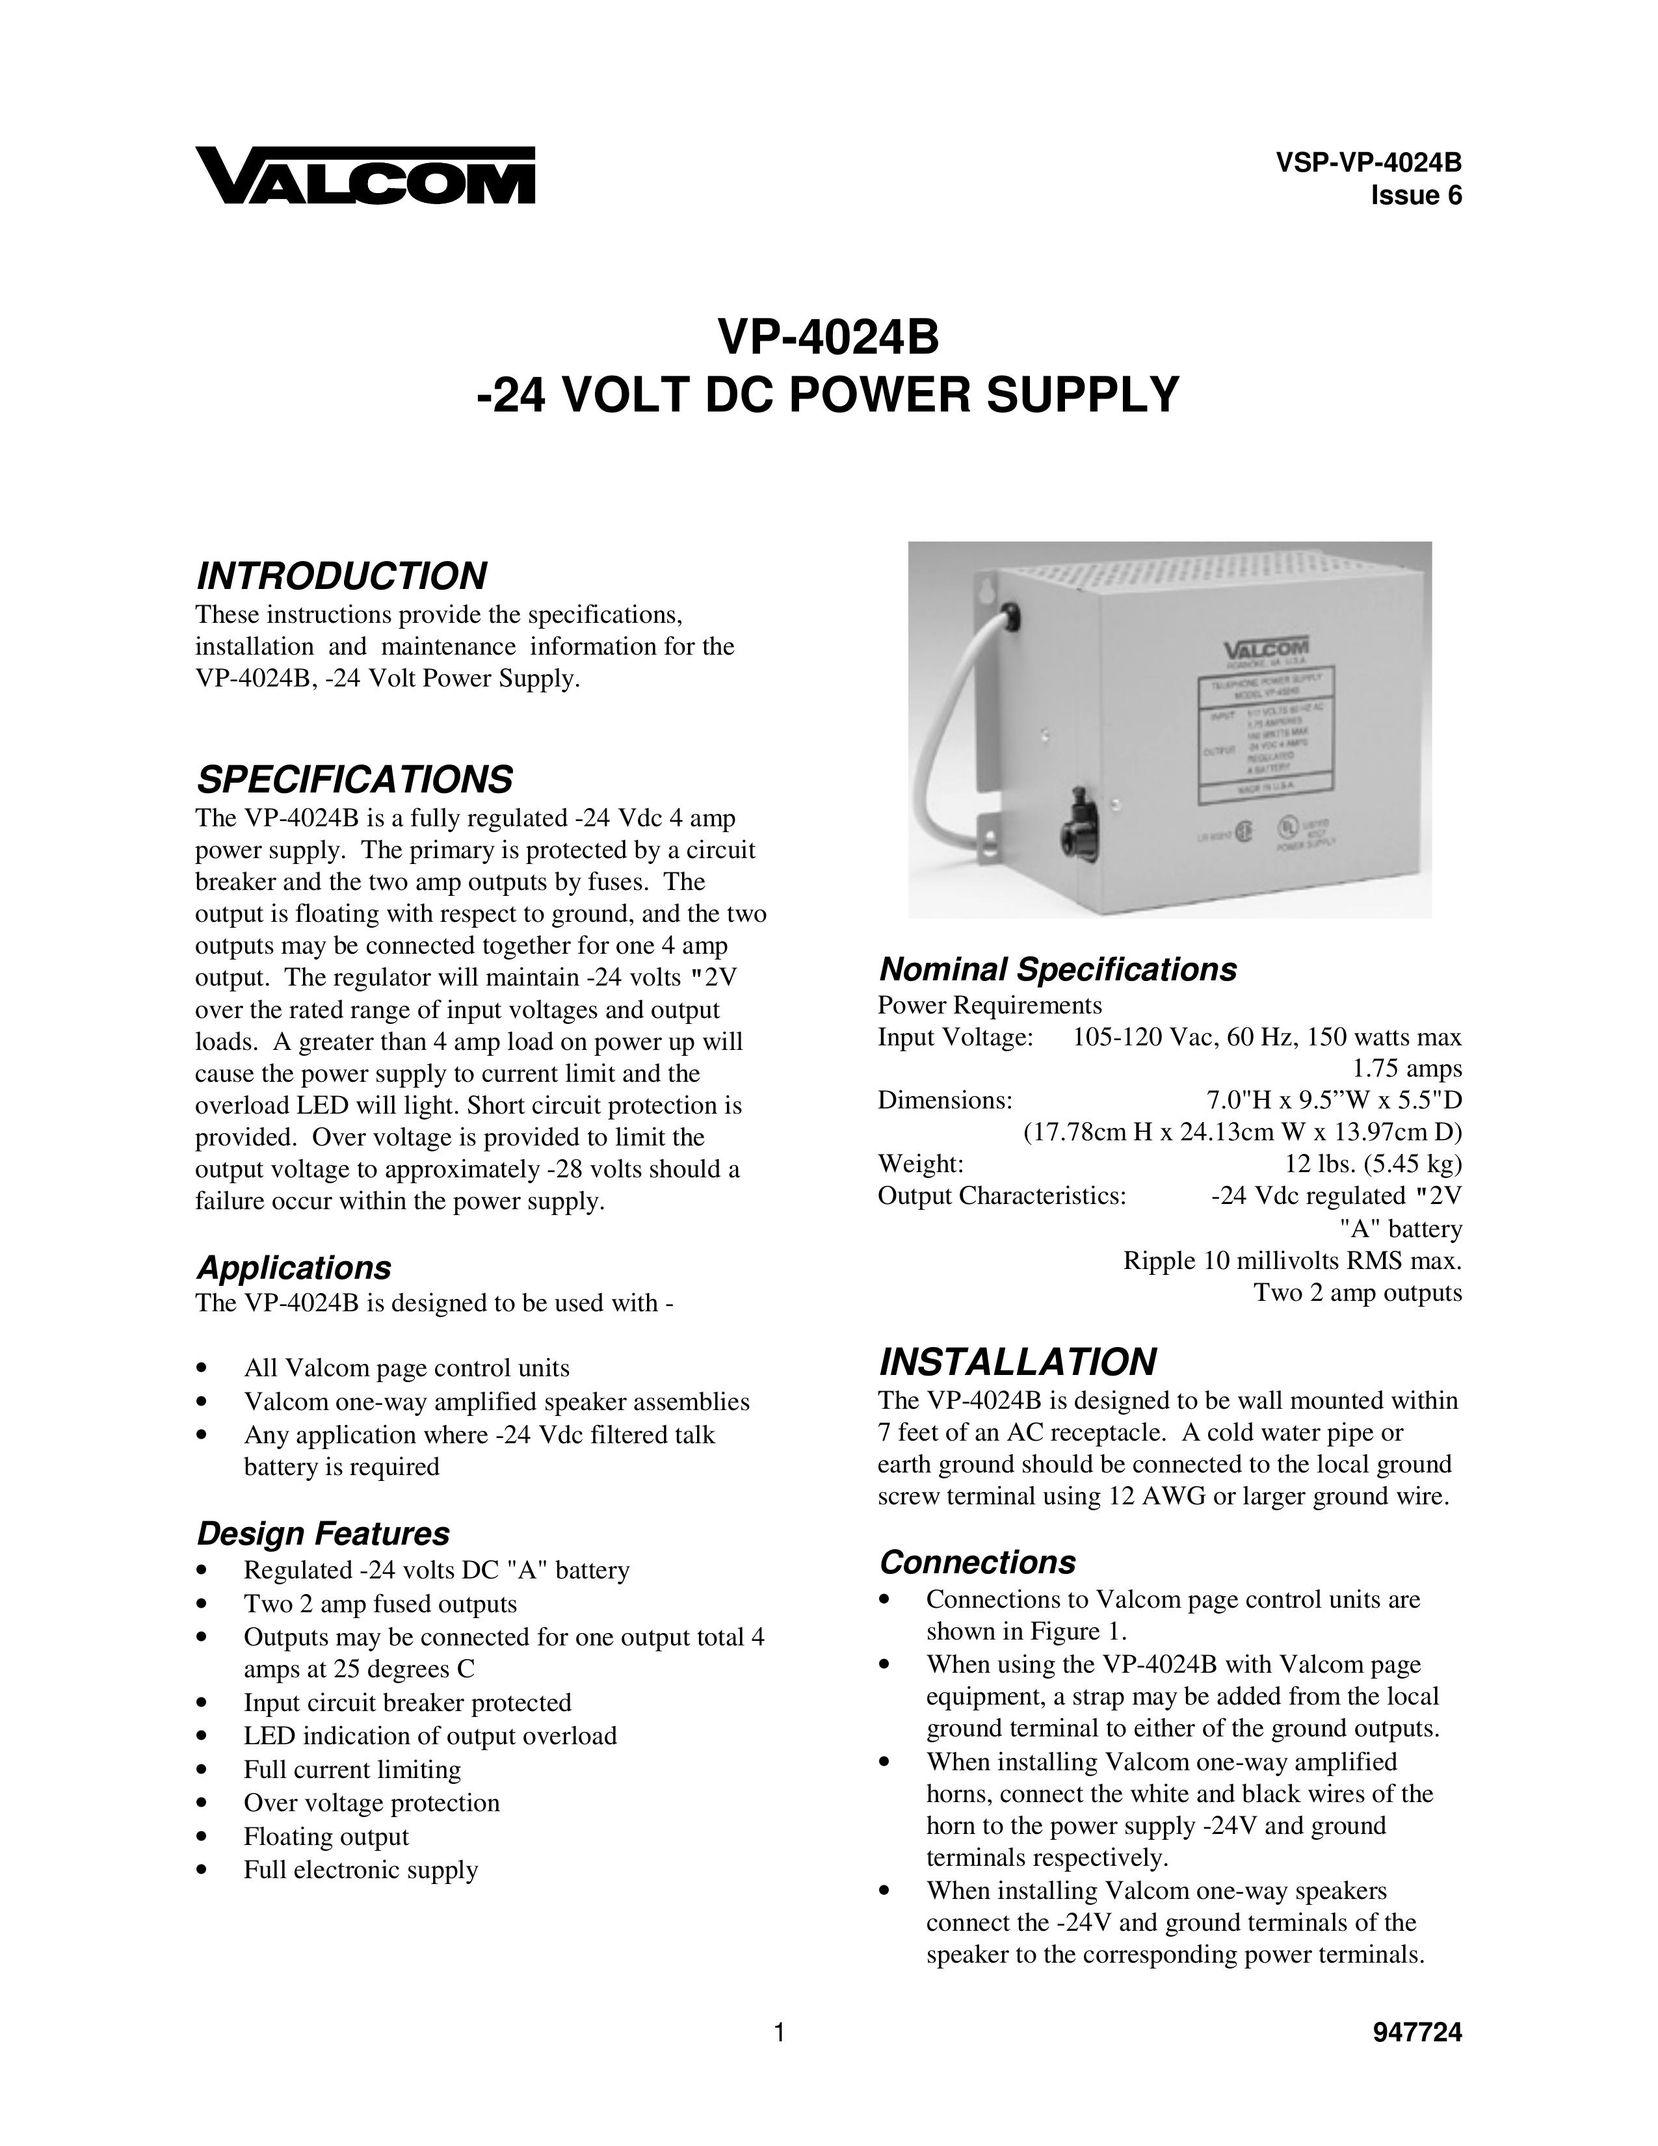 Valcom vp 4024b Welding System User Manual